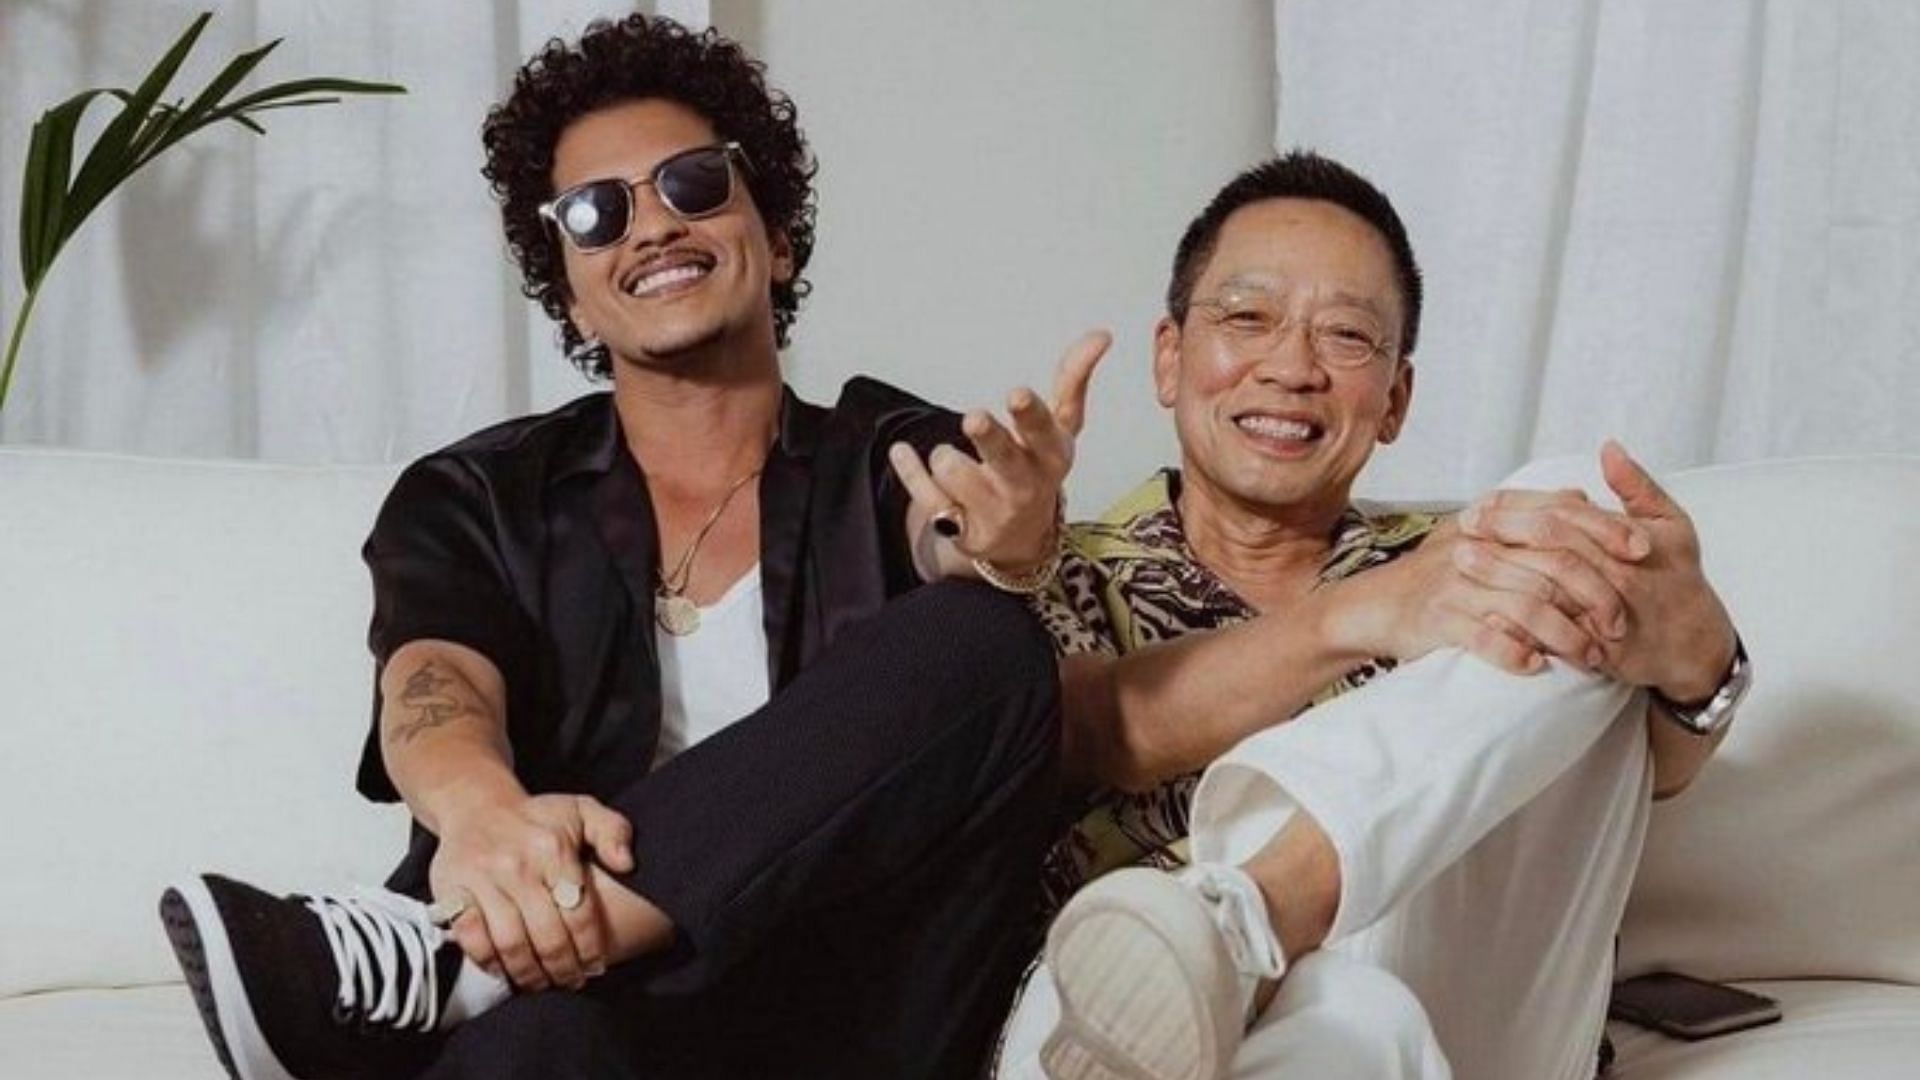 Bruno Mars’ concert organisers deny gifting Korean celebrities tickets